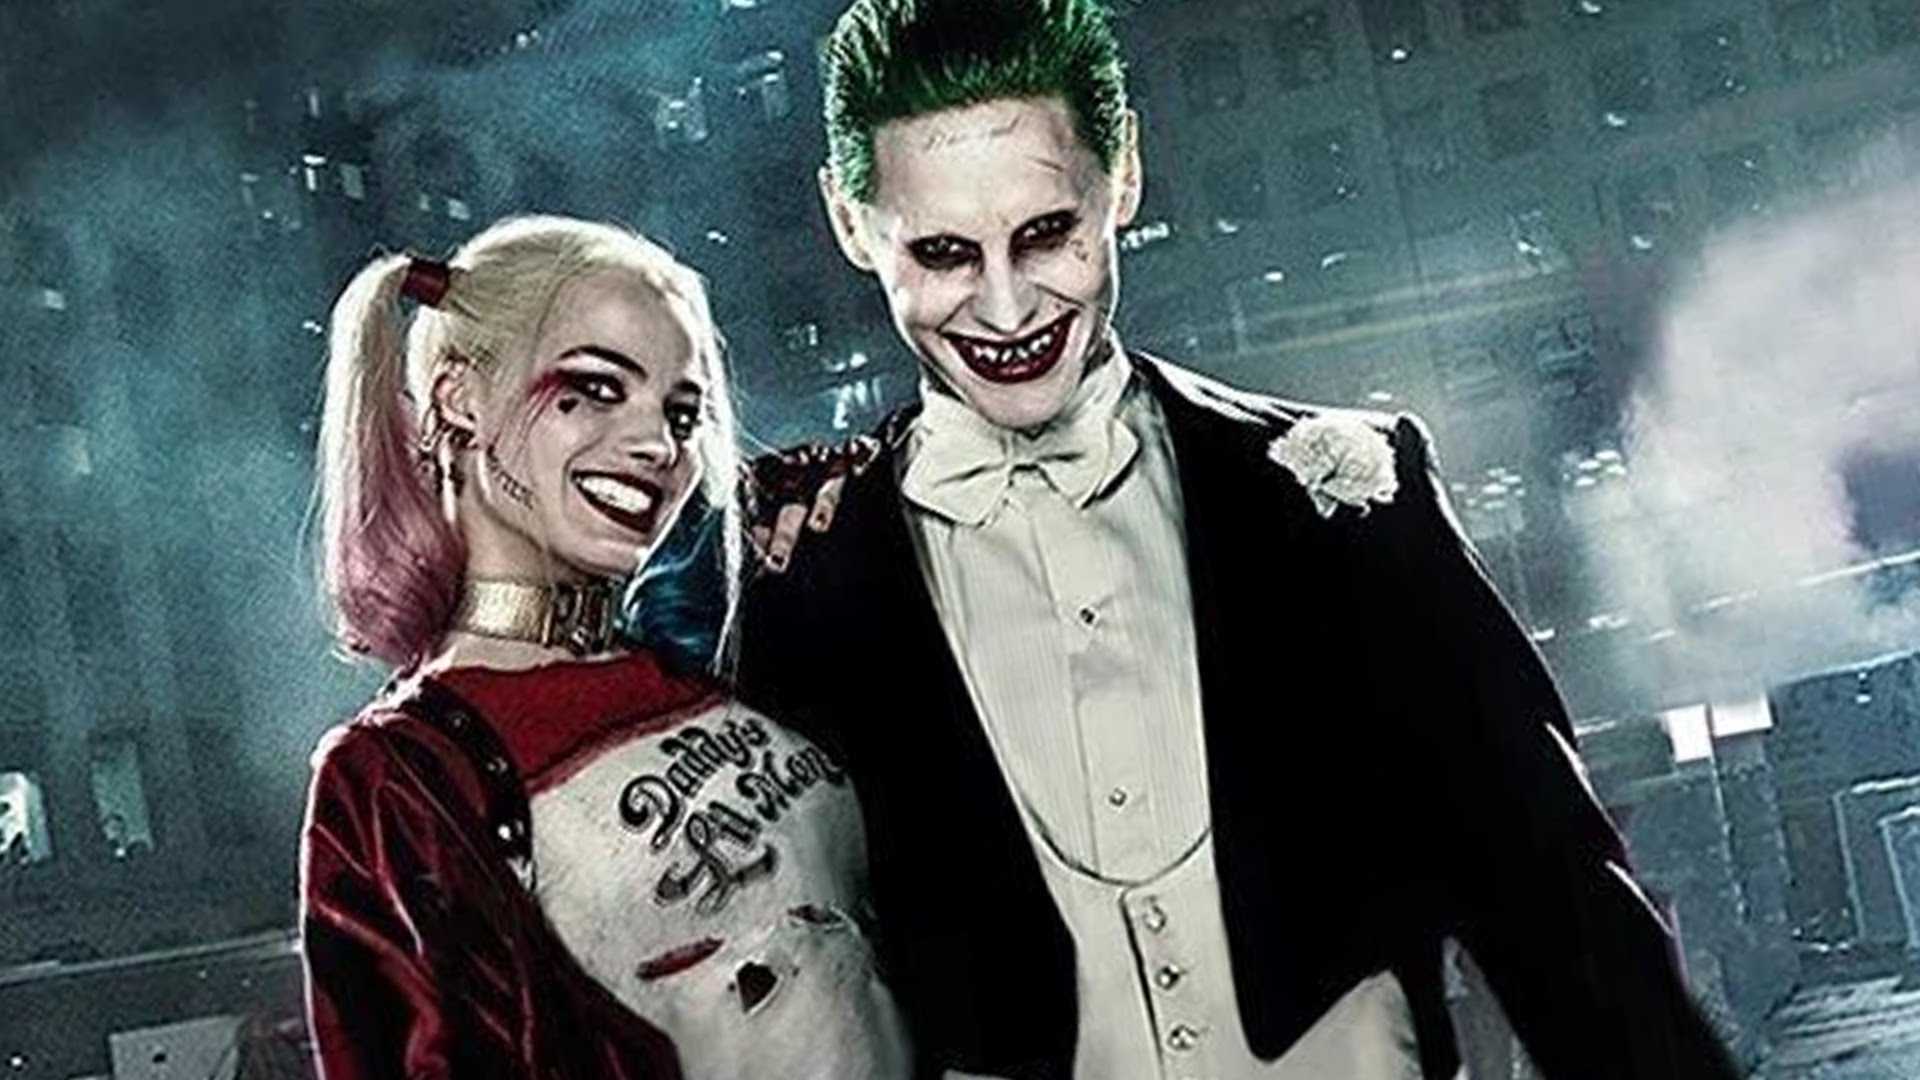 Joker Suicide Squad Wallpapers - Top Free Joker Suicide Squad ...